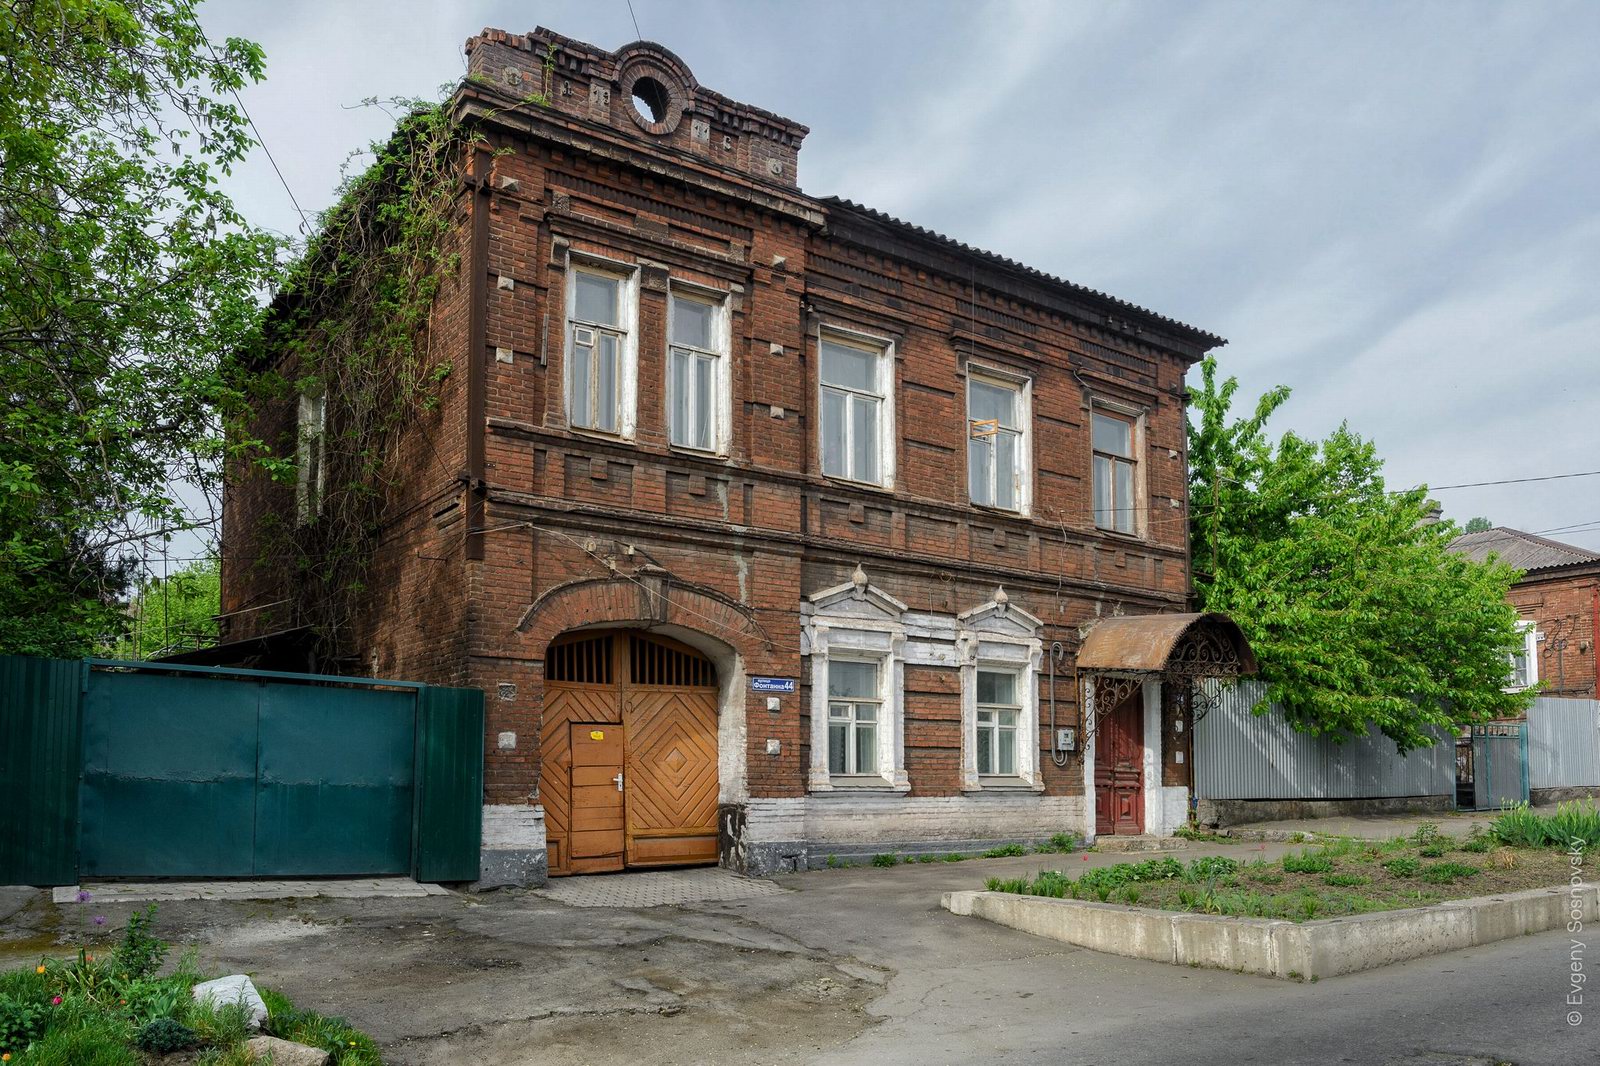 Picturesque Old Houses of Mariupol, Ukraine, photo 18